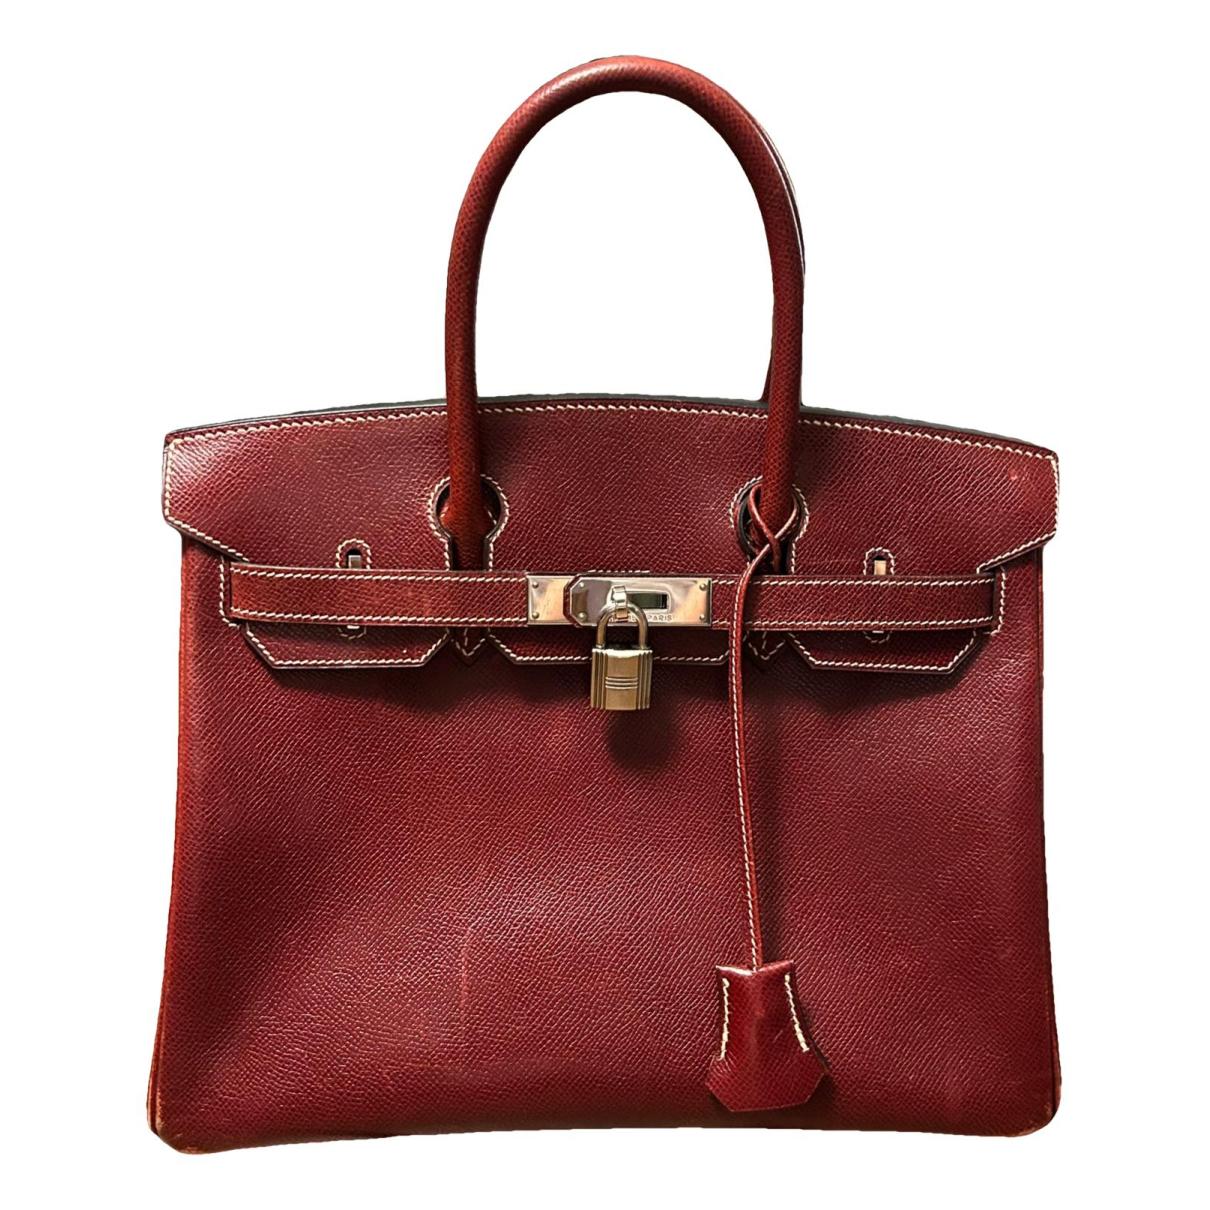 Hermès - Authenticated Birkin 35 Handbag - Leather Burgundy Plain for Women, Very Good Condition